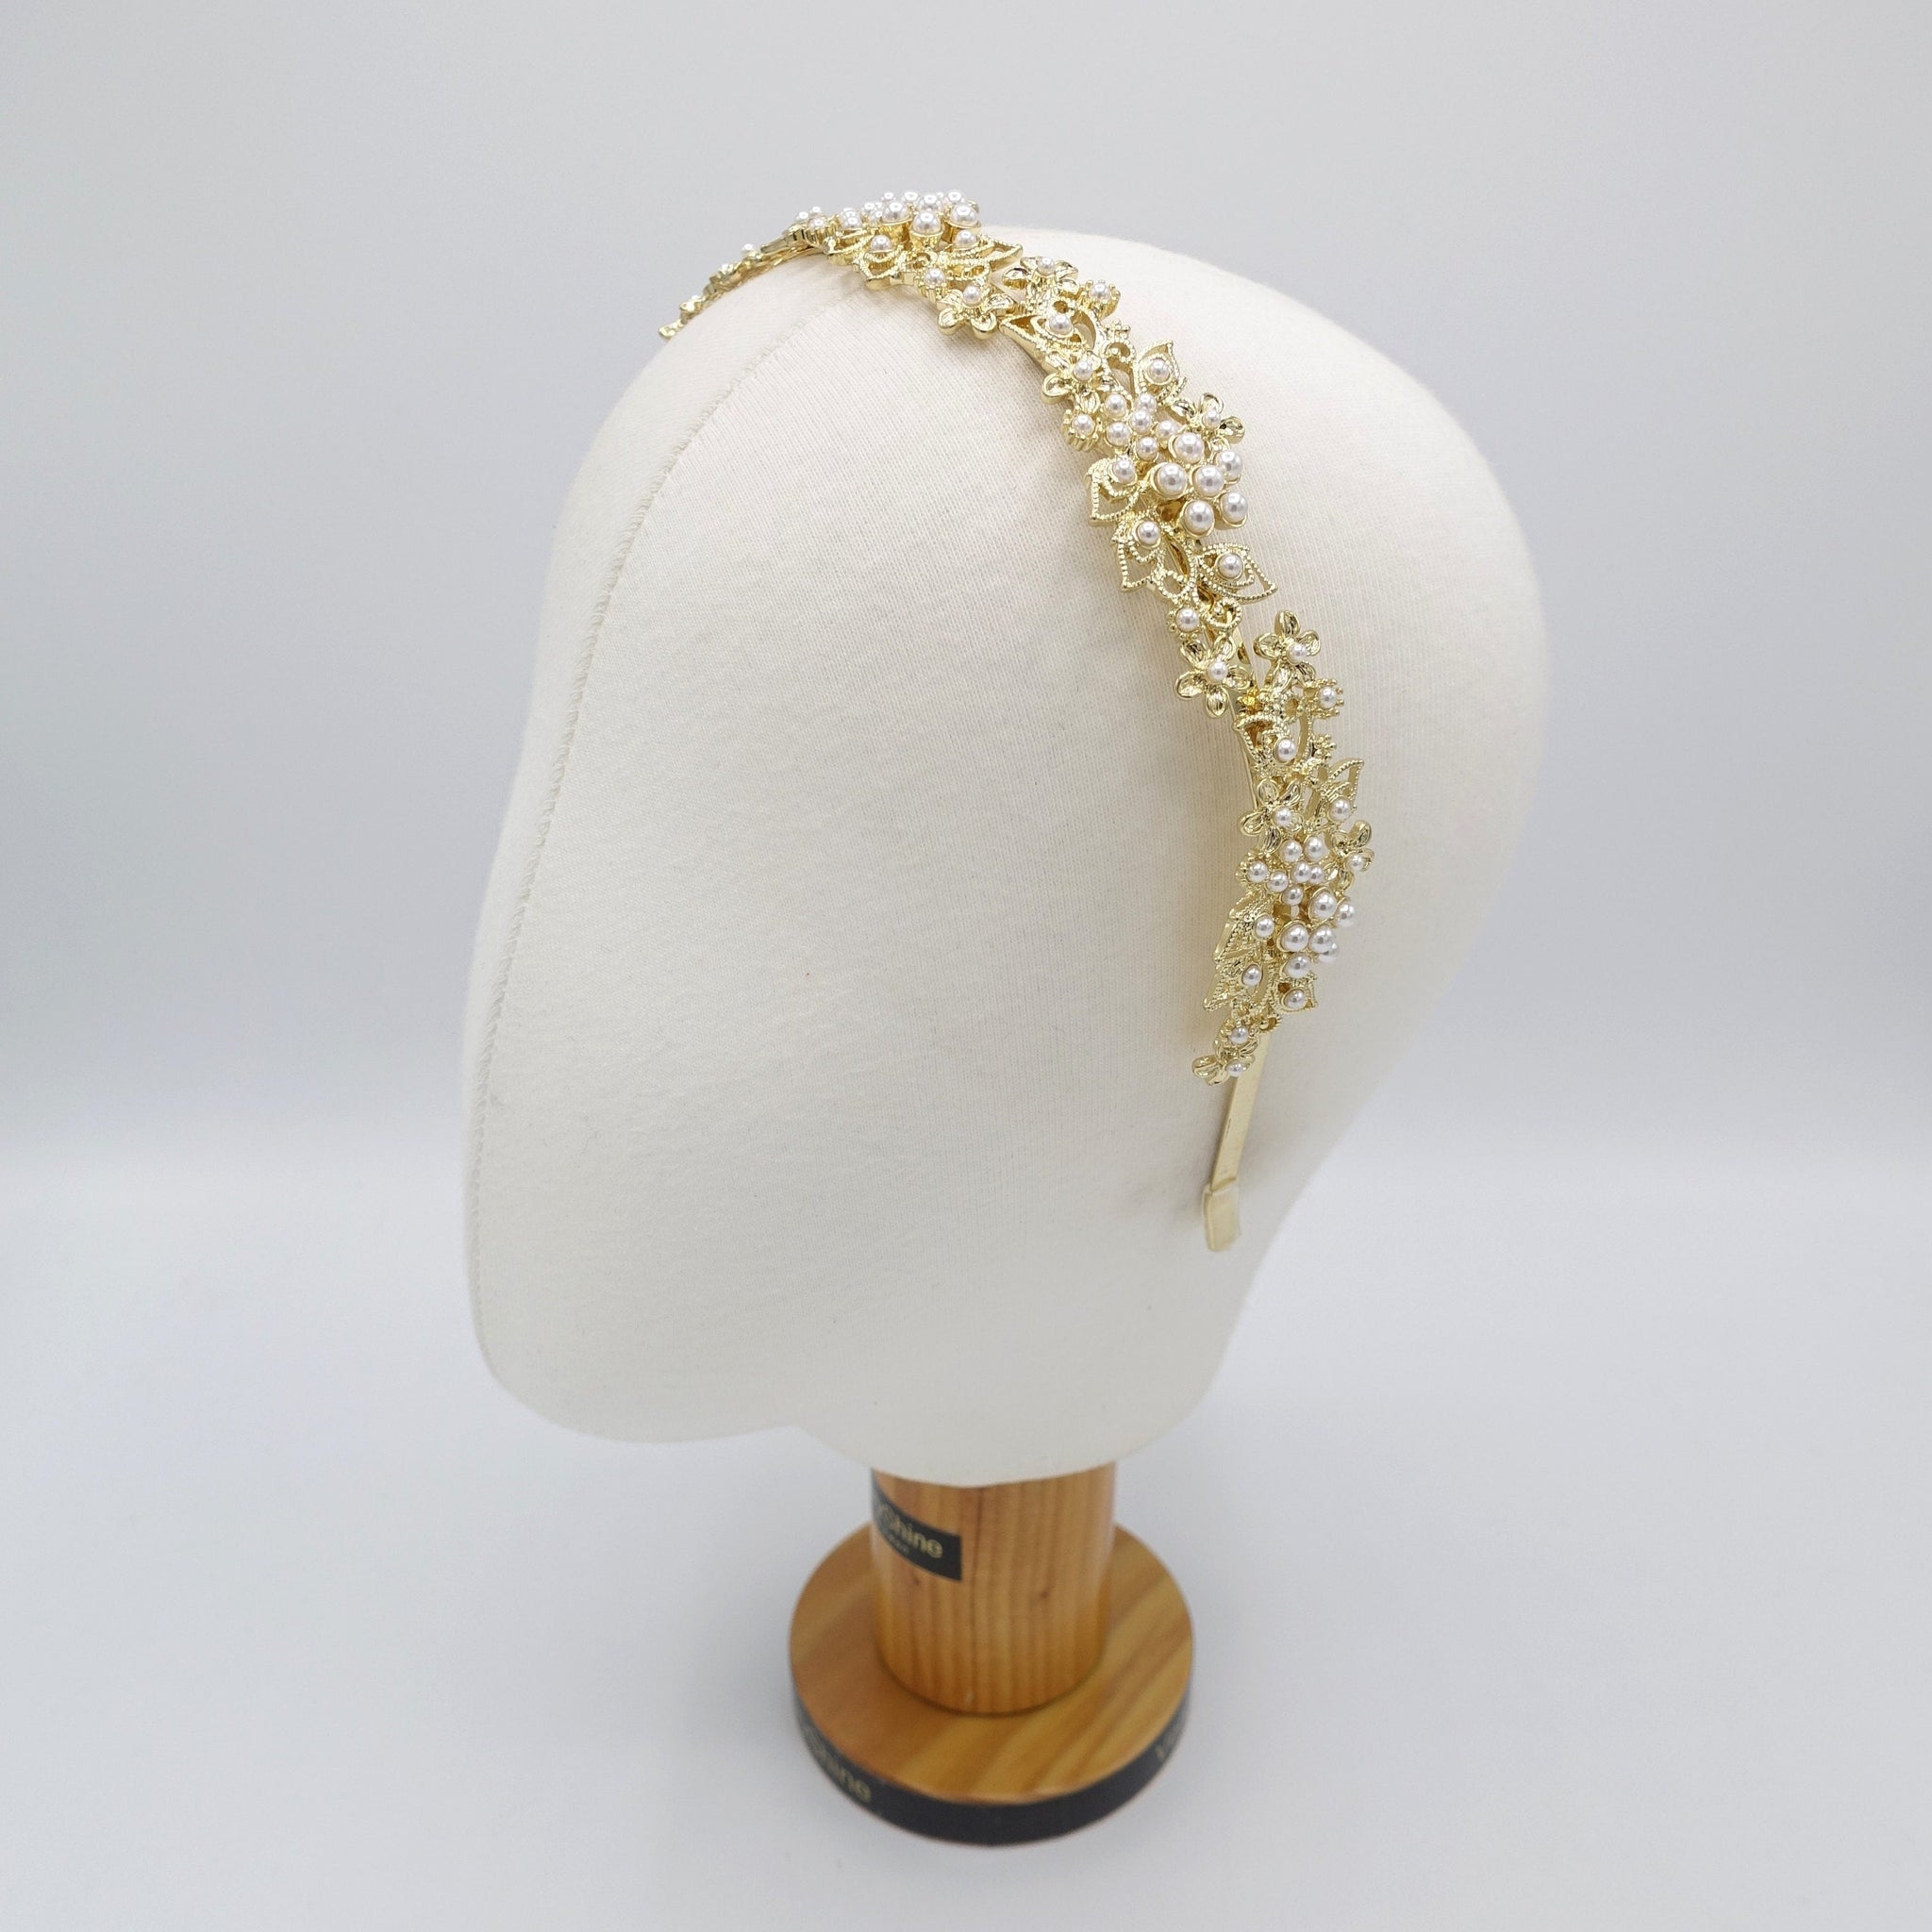 veryshine.com Headband pearl petal metal thin headband flower event hair accessory for women